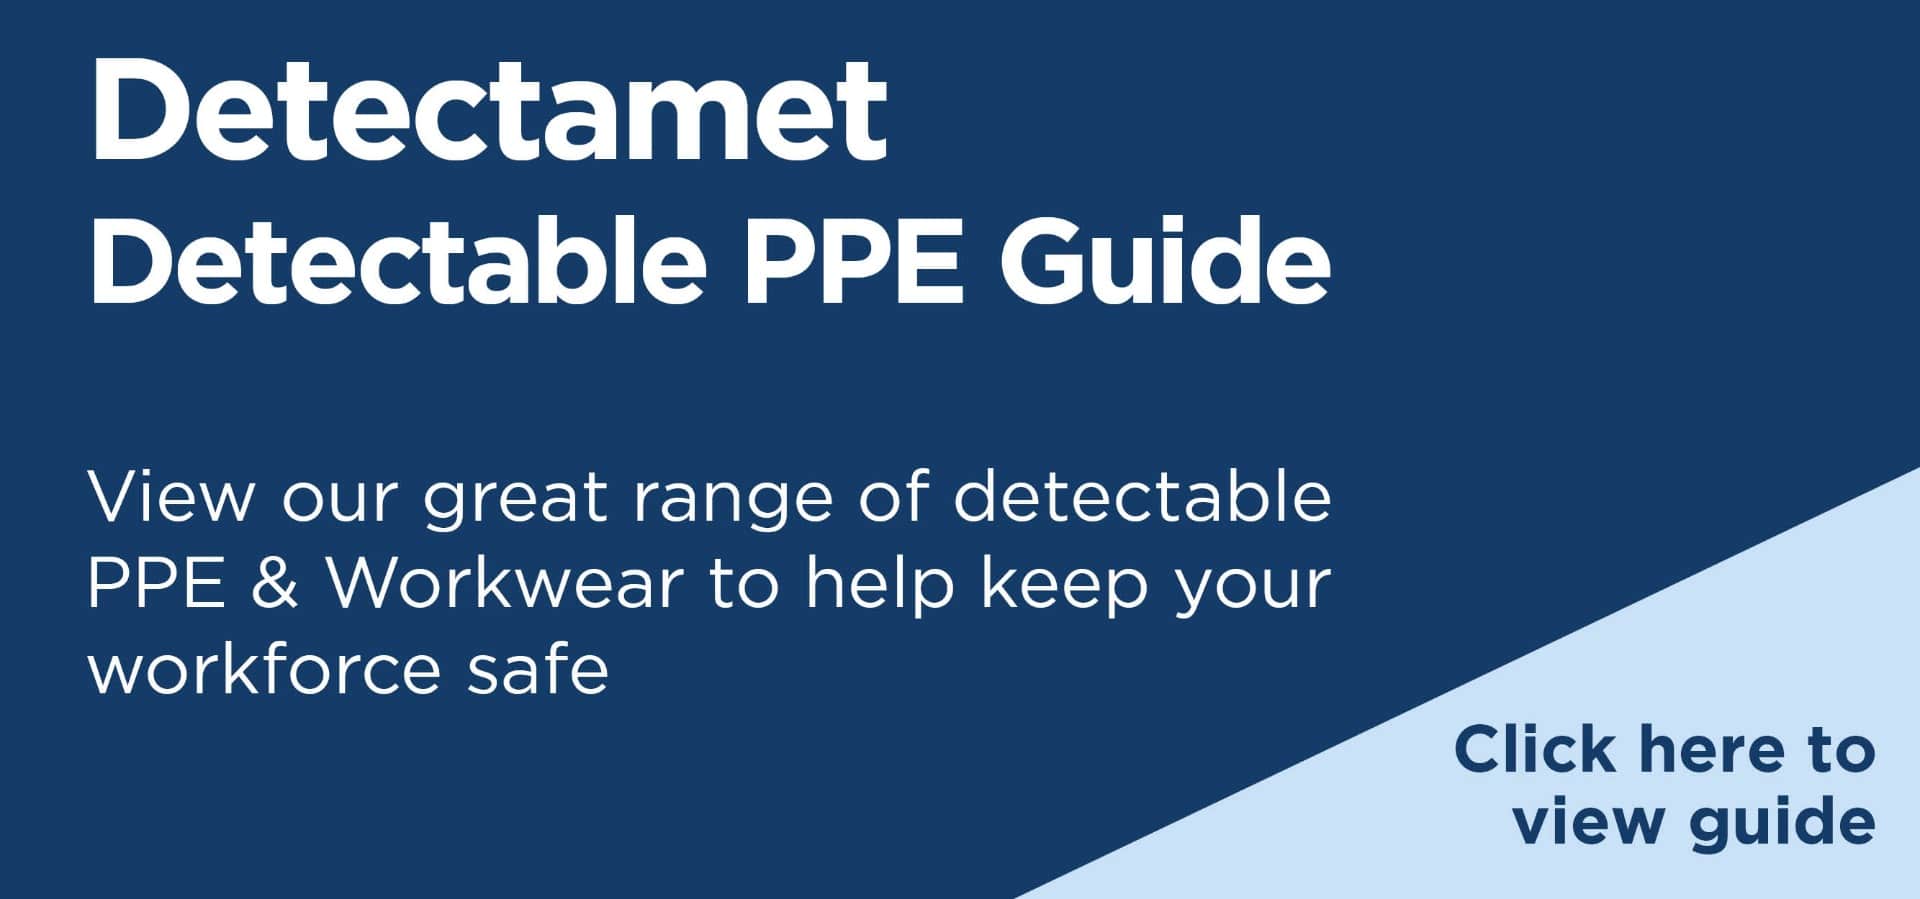 Detectamet Detectable PPE Guide